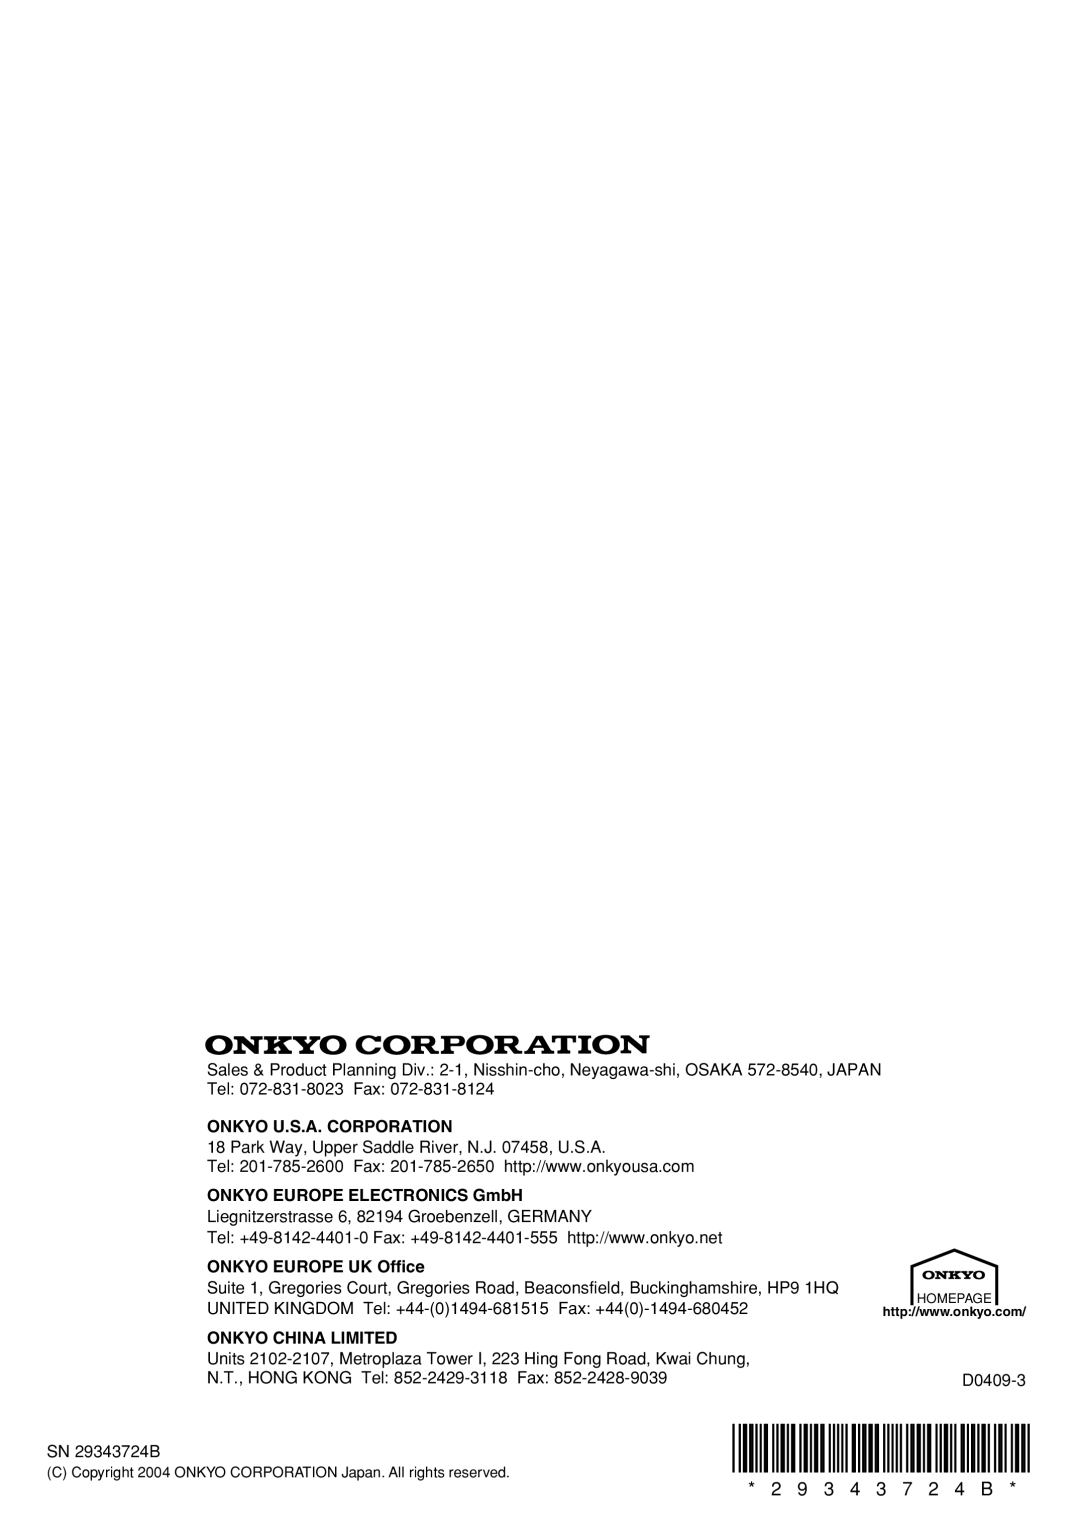 Onkyo DV-SP302 2 9 3 4 3 7 2 4 B, Onkyo U.S.A. Corporation, ONKYO EUROPE ELECTRONICS GmbH, ONKYO EUROPE UK Office 